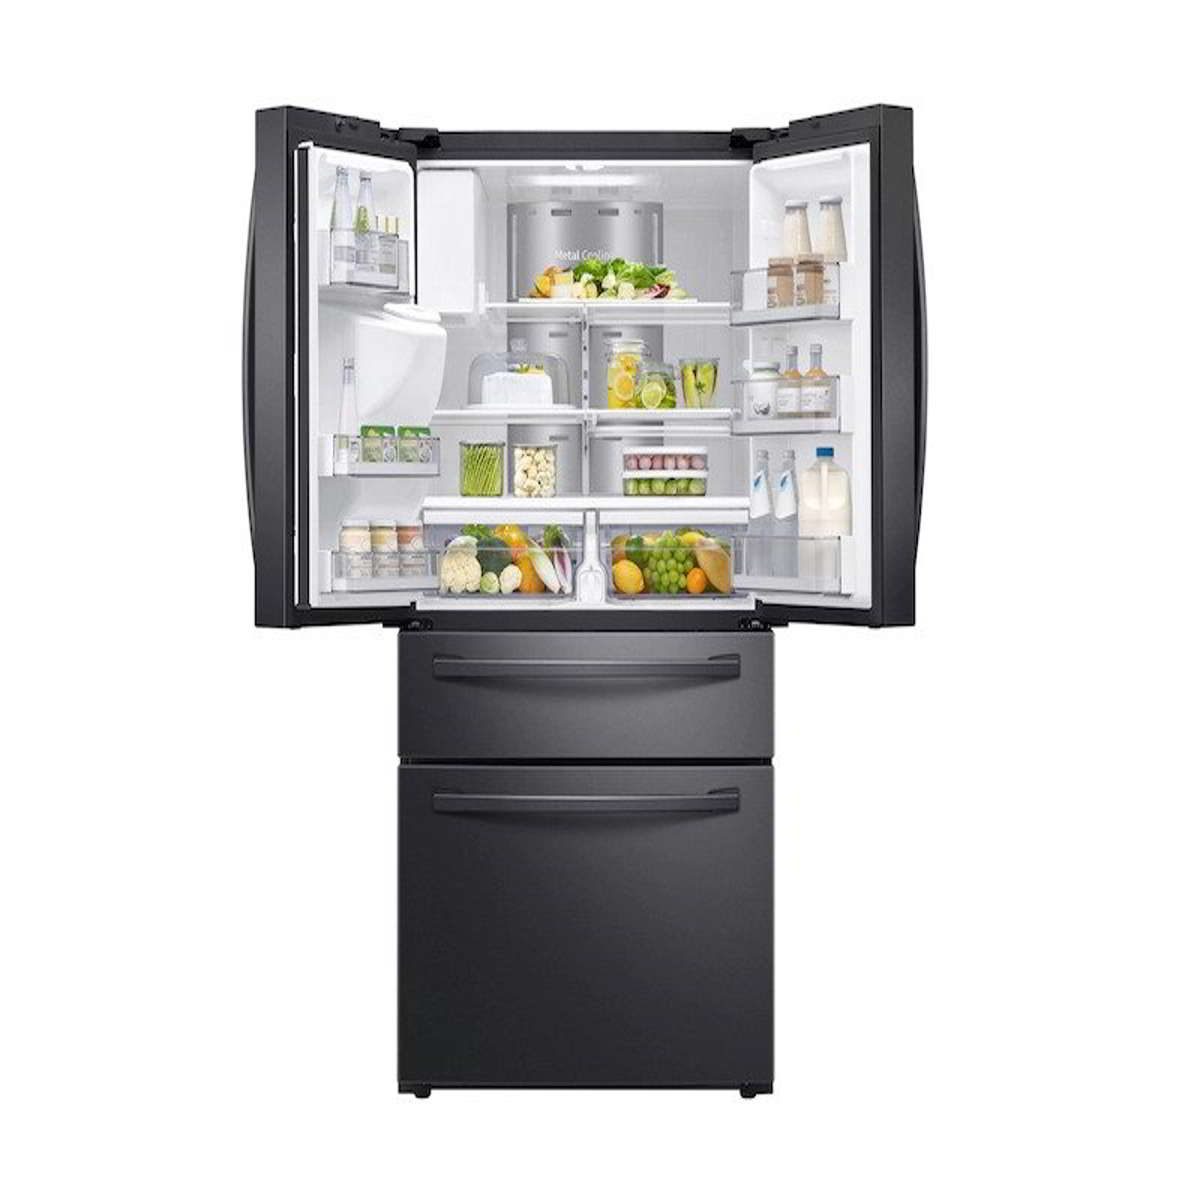 Samsung refrigerator reset temp